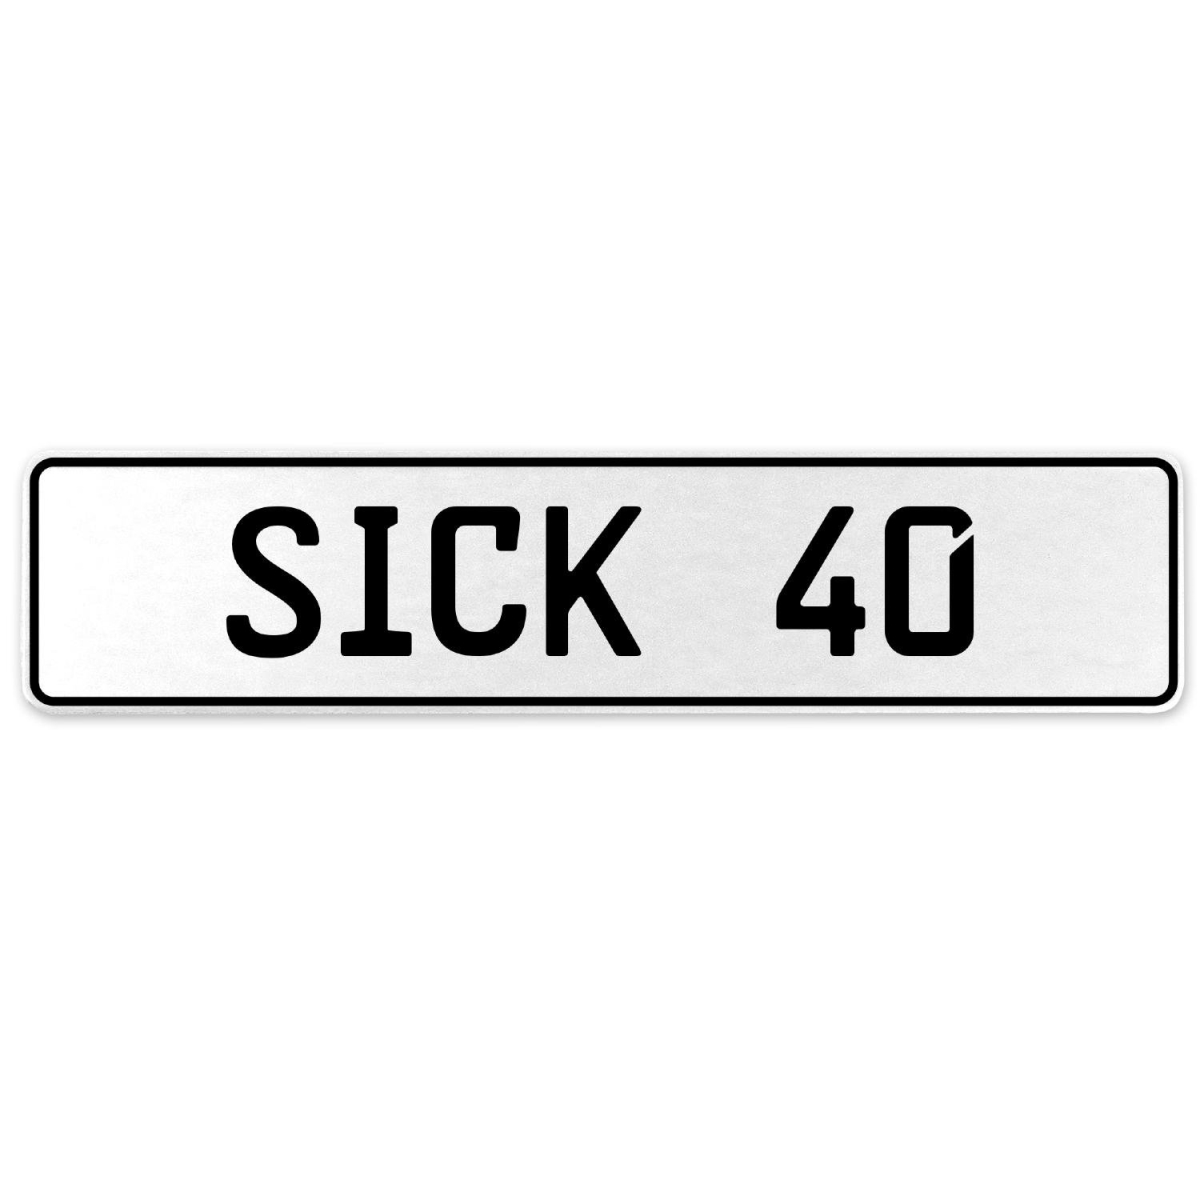 554340 Sick 40 - White Aluminum Street Sign Mancave Euro Plate Name Door Sign Wall